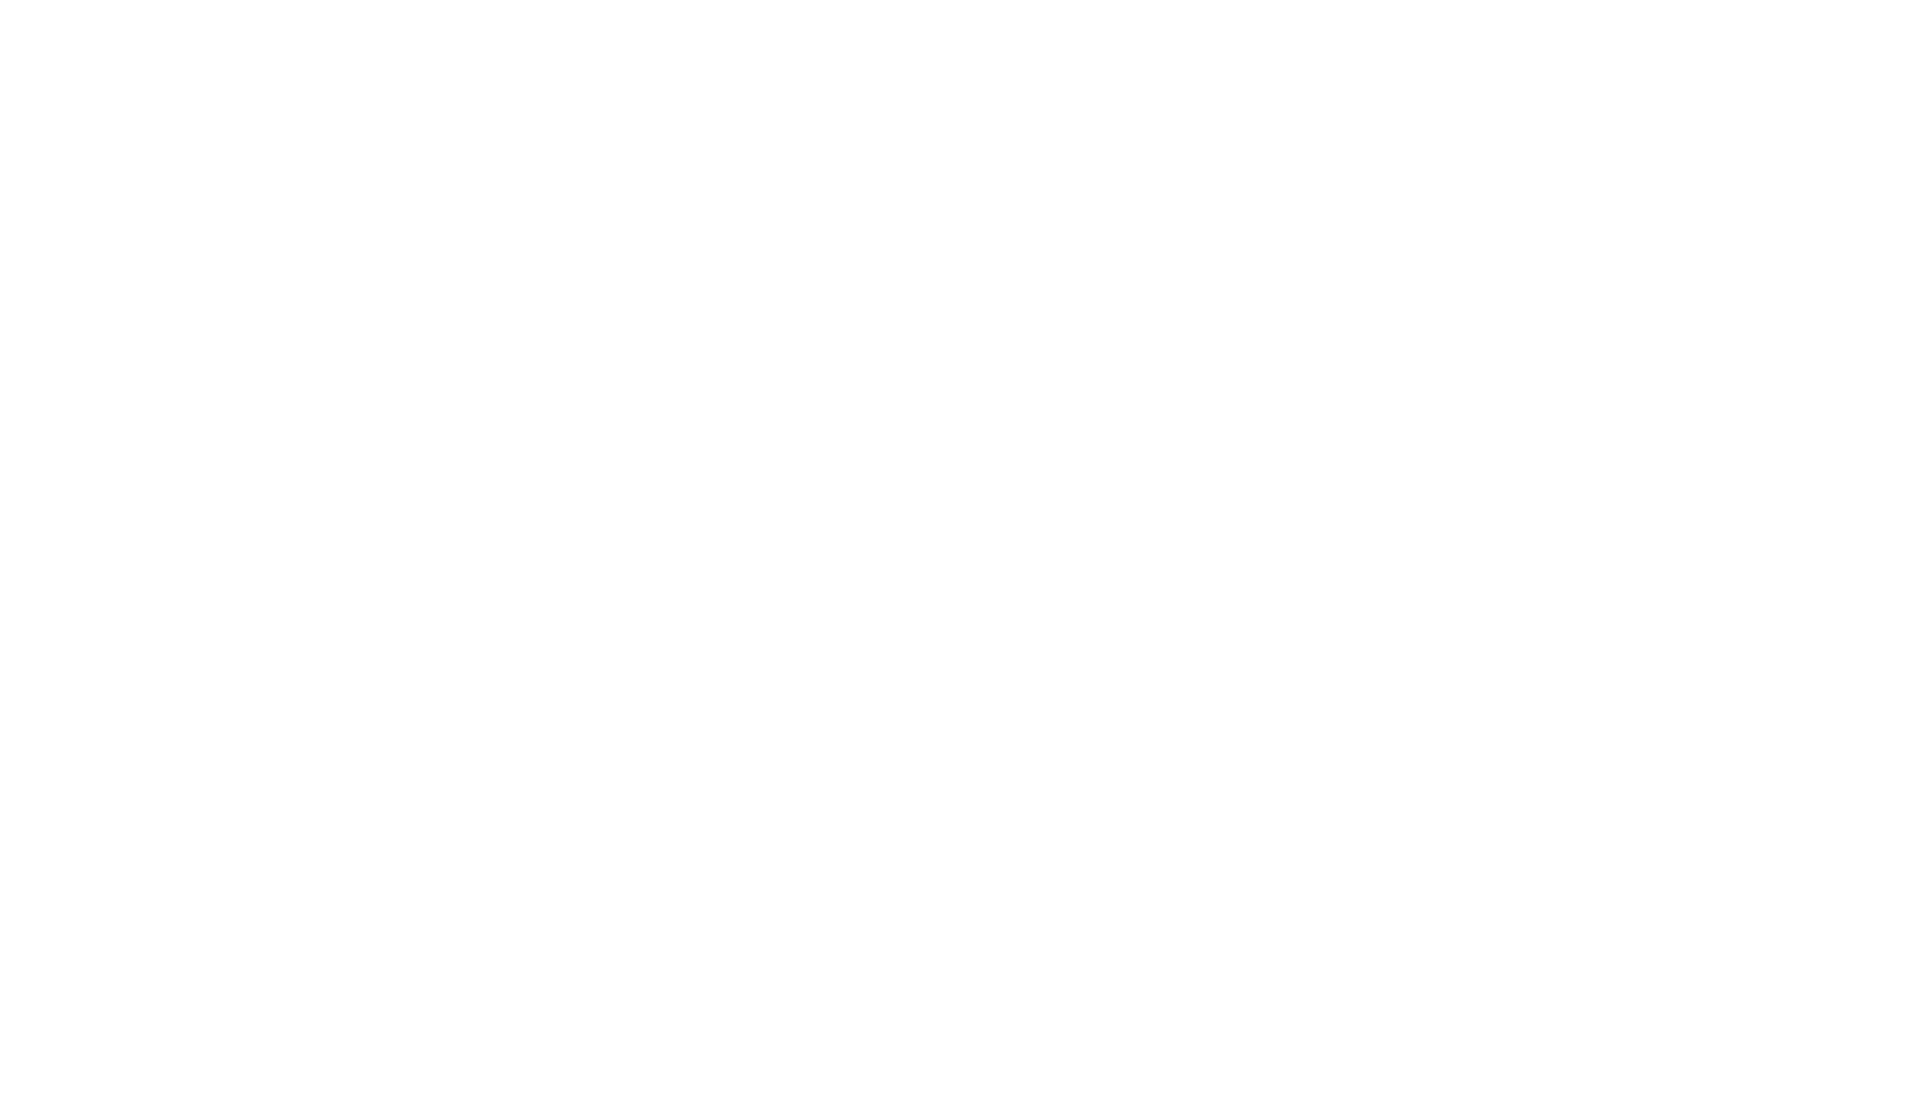 NEFCO_LogoTagline_Version1_White.png